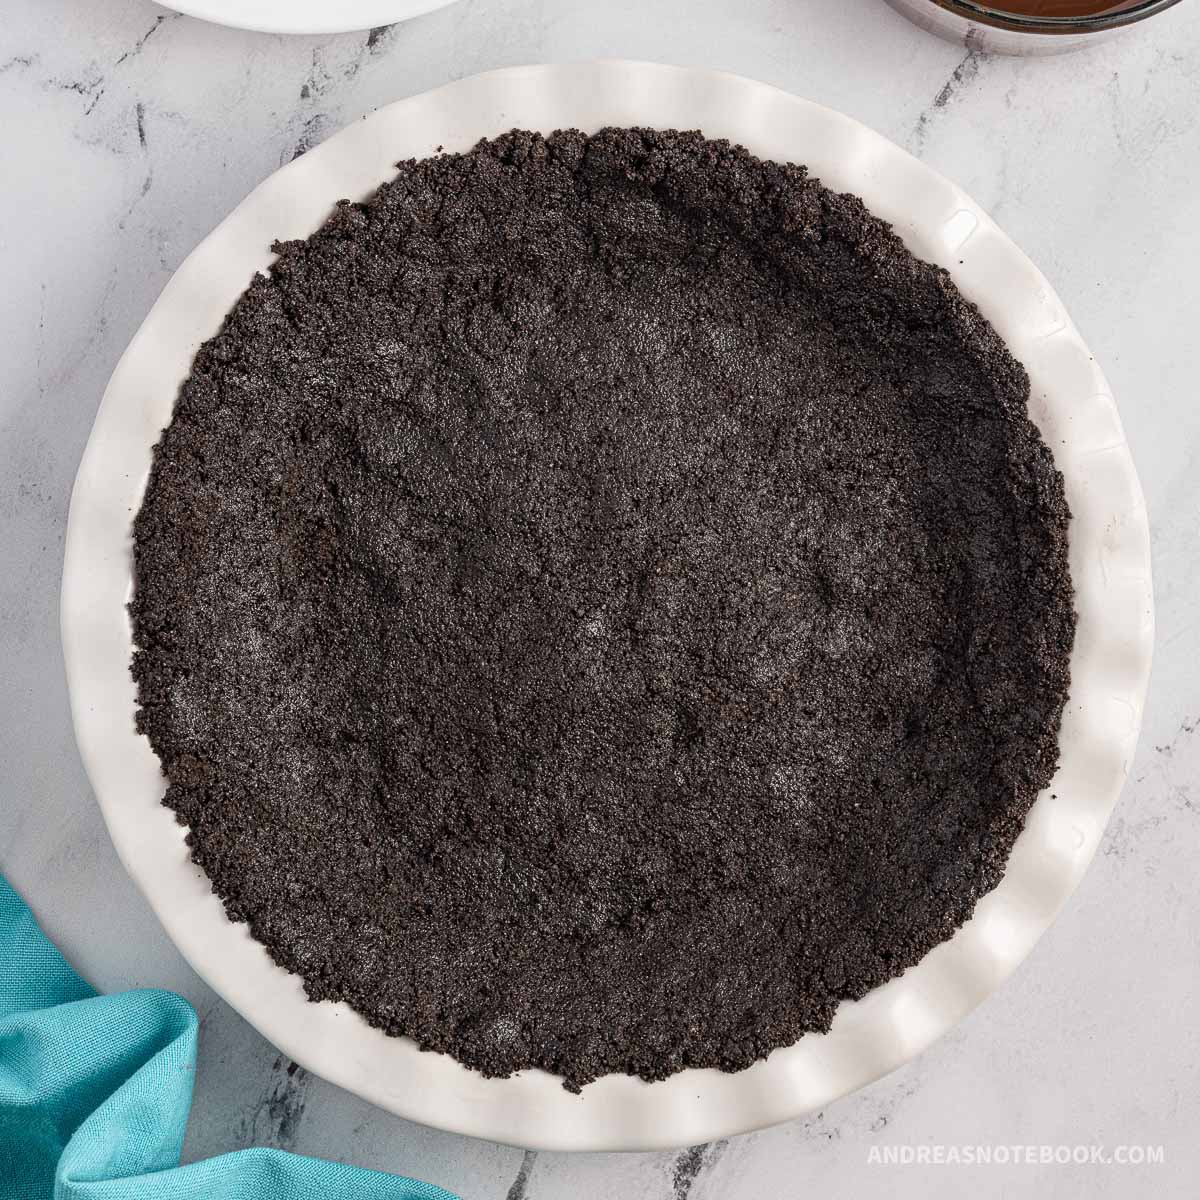 No bake chocolate oreo pie crust in a white pie pan.